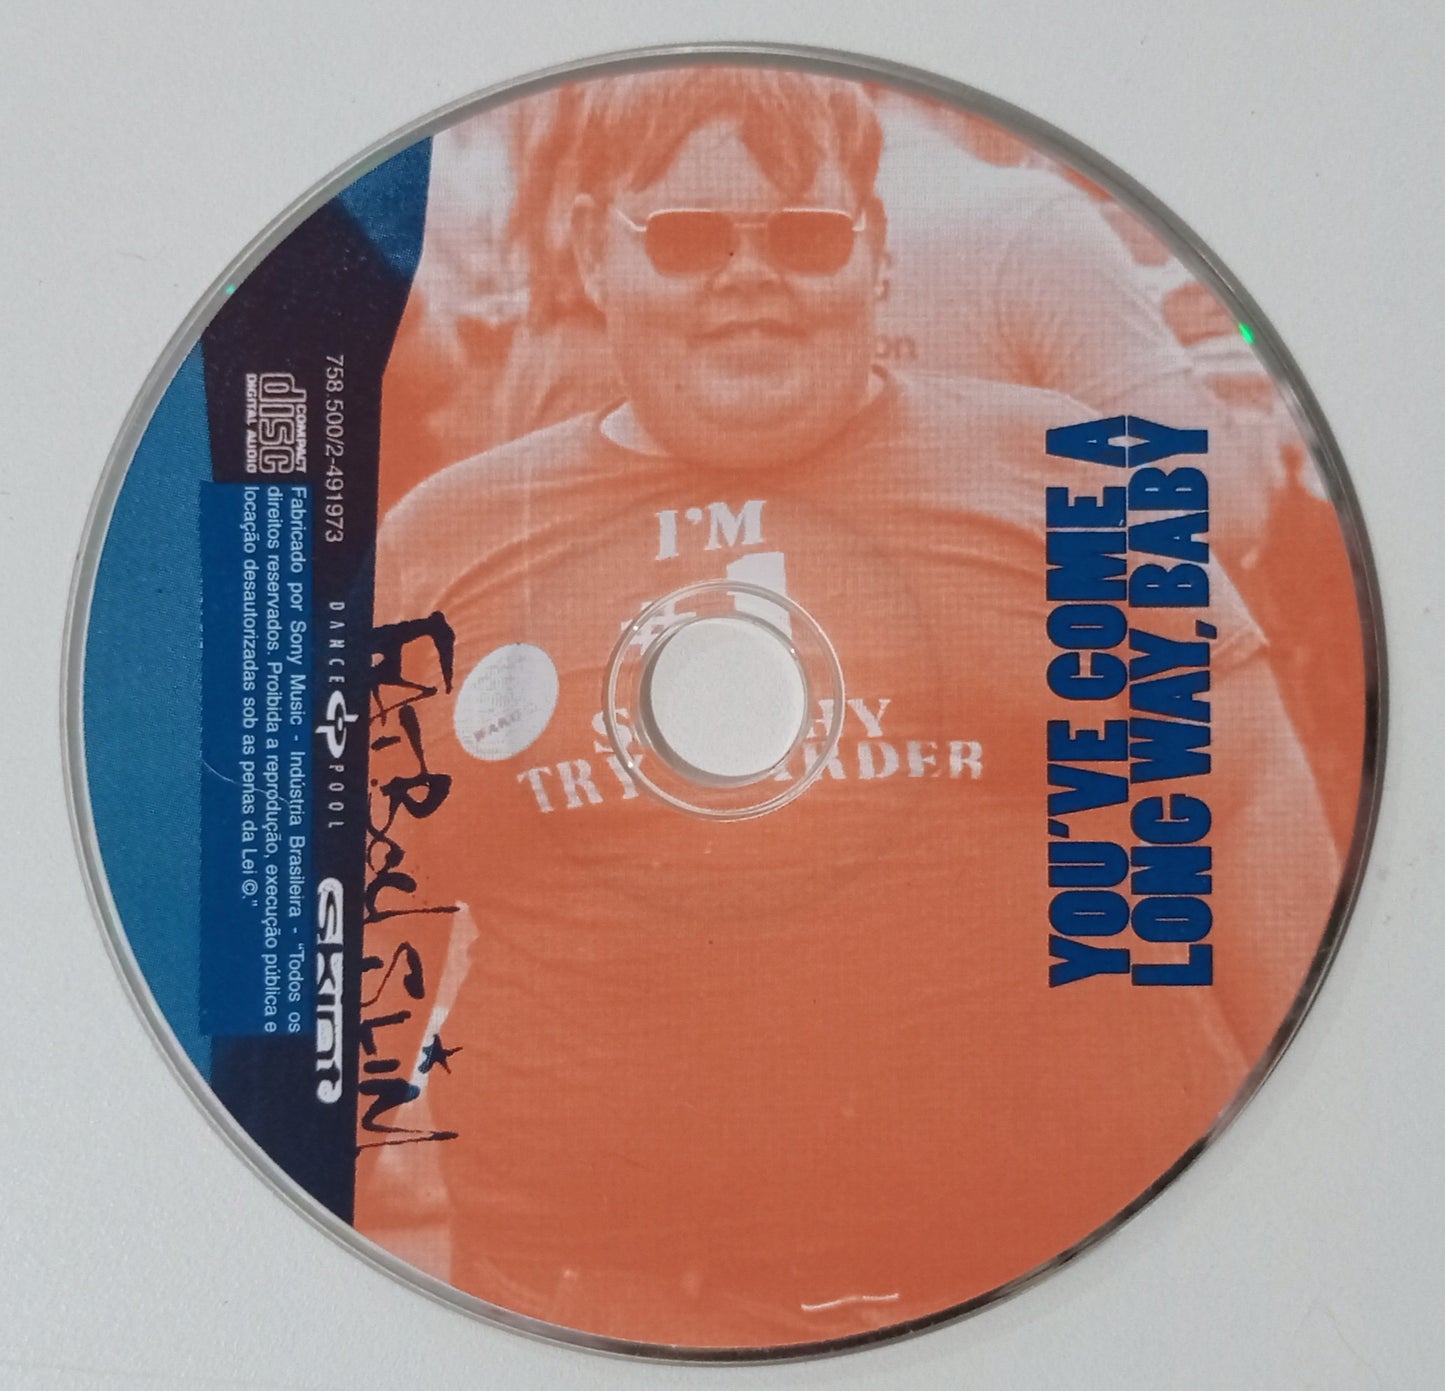 Fatboy Slim - You've Come a Long Way, Baby (CD Nacional - Usado)